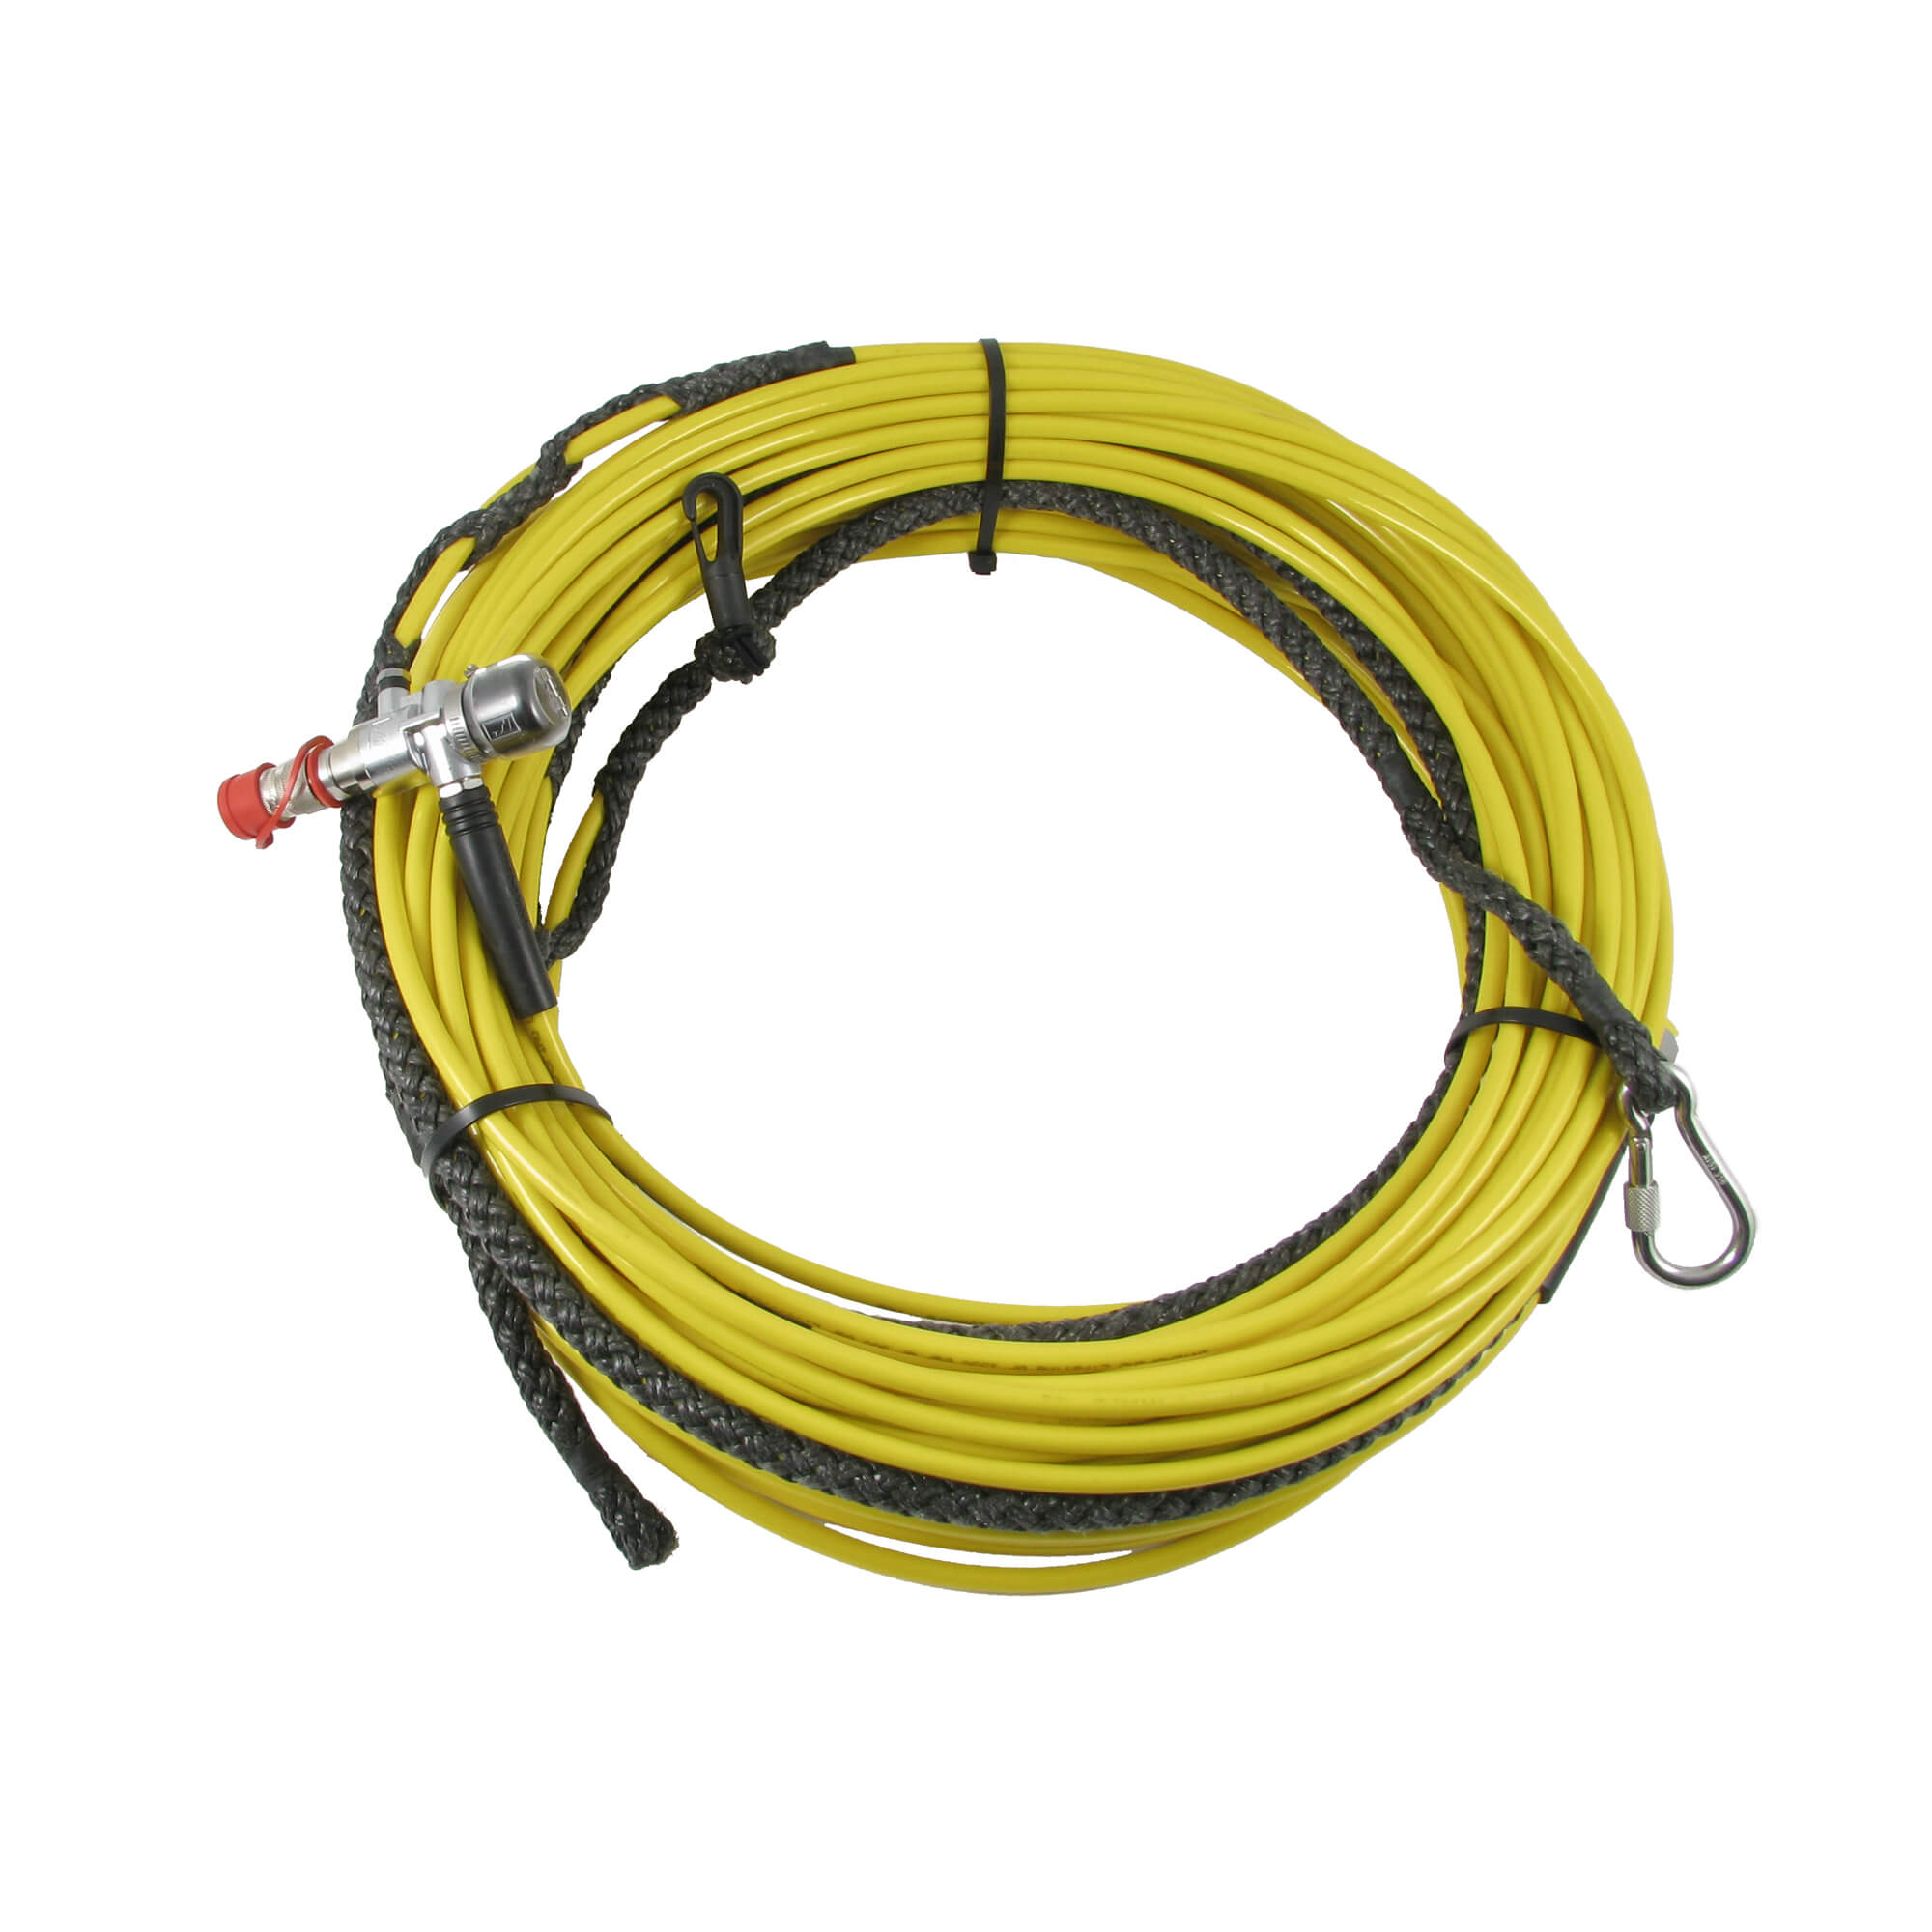 Divator DP1 Supply hose